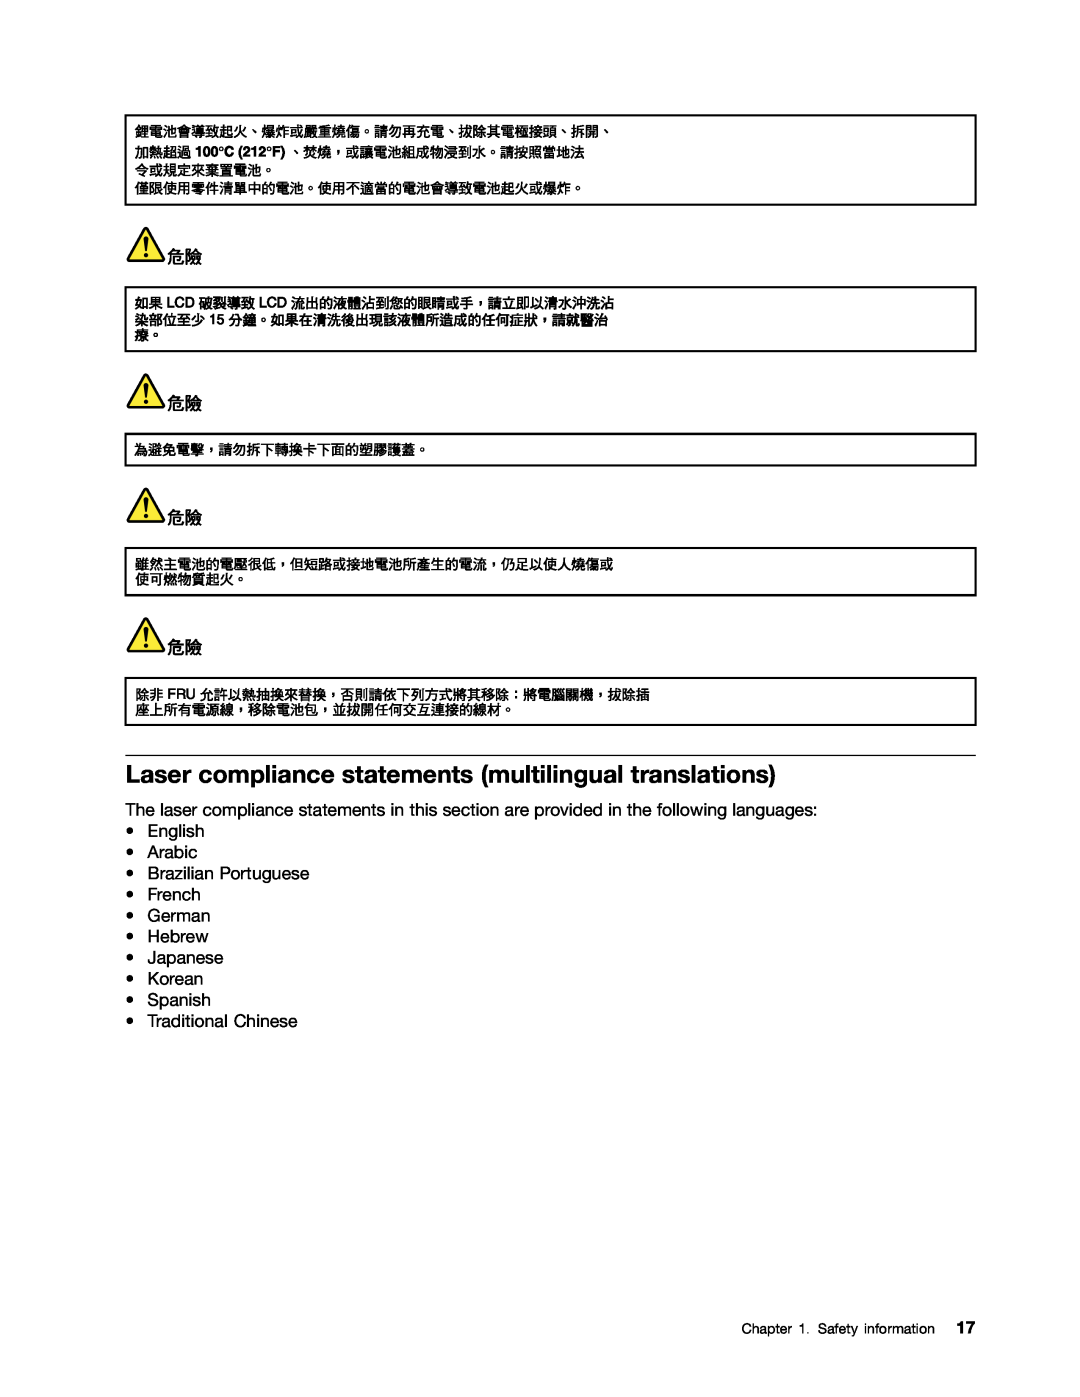 Lenovo 2394F1U, W530, T530i manual Laser compliance statements multilingual translations, Korean Spanish Traditional Chinese 